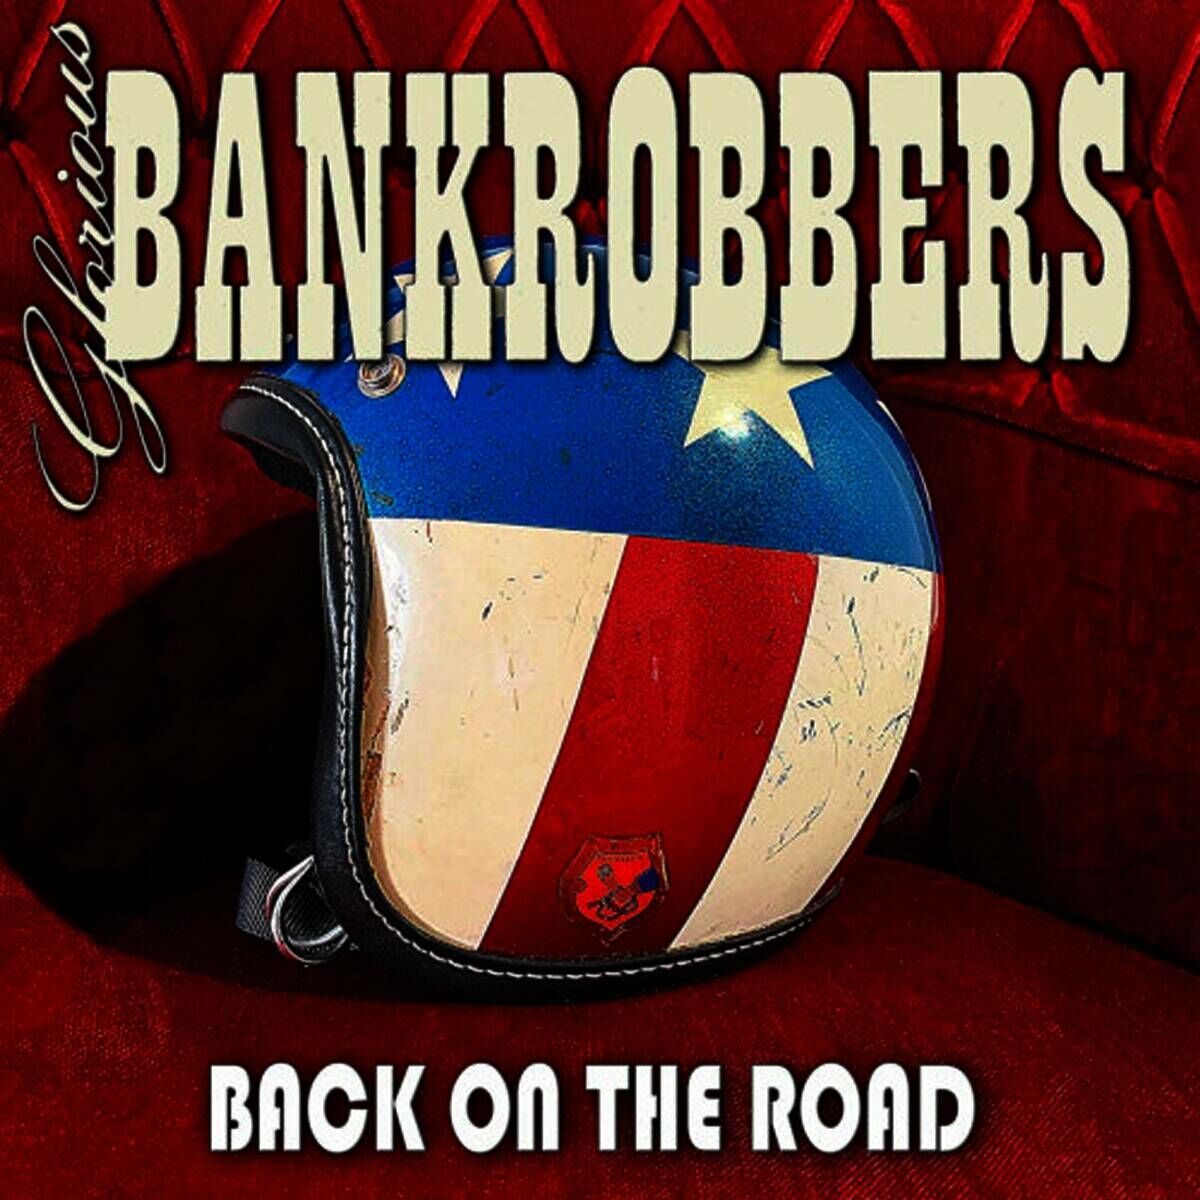 The Glorious Bankrobbers